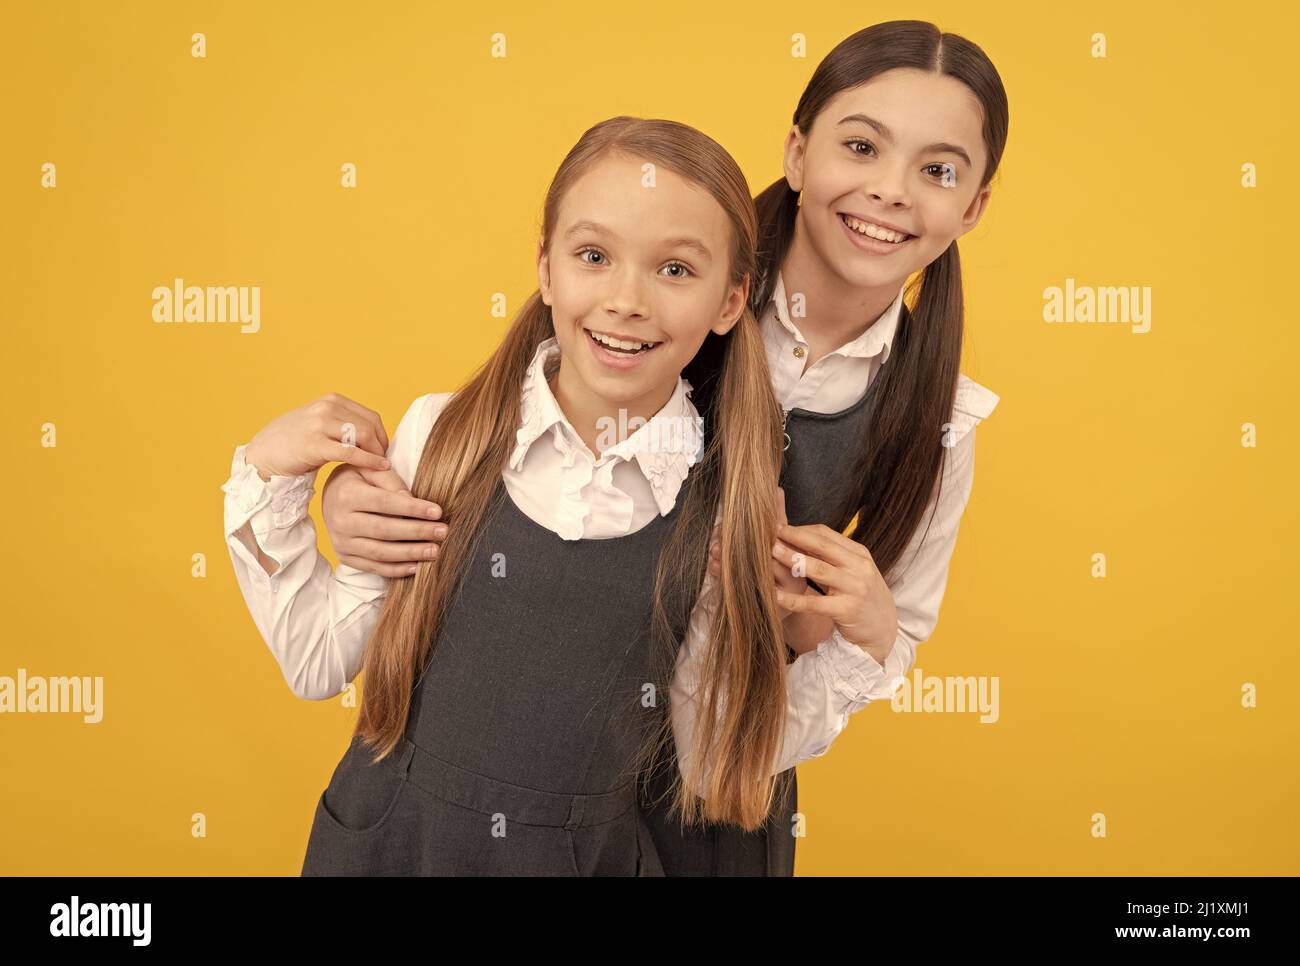 Happy school kids with beauty look wear long hair in formal uniforms yellow background, salon Stock Photo